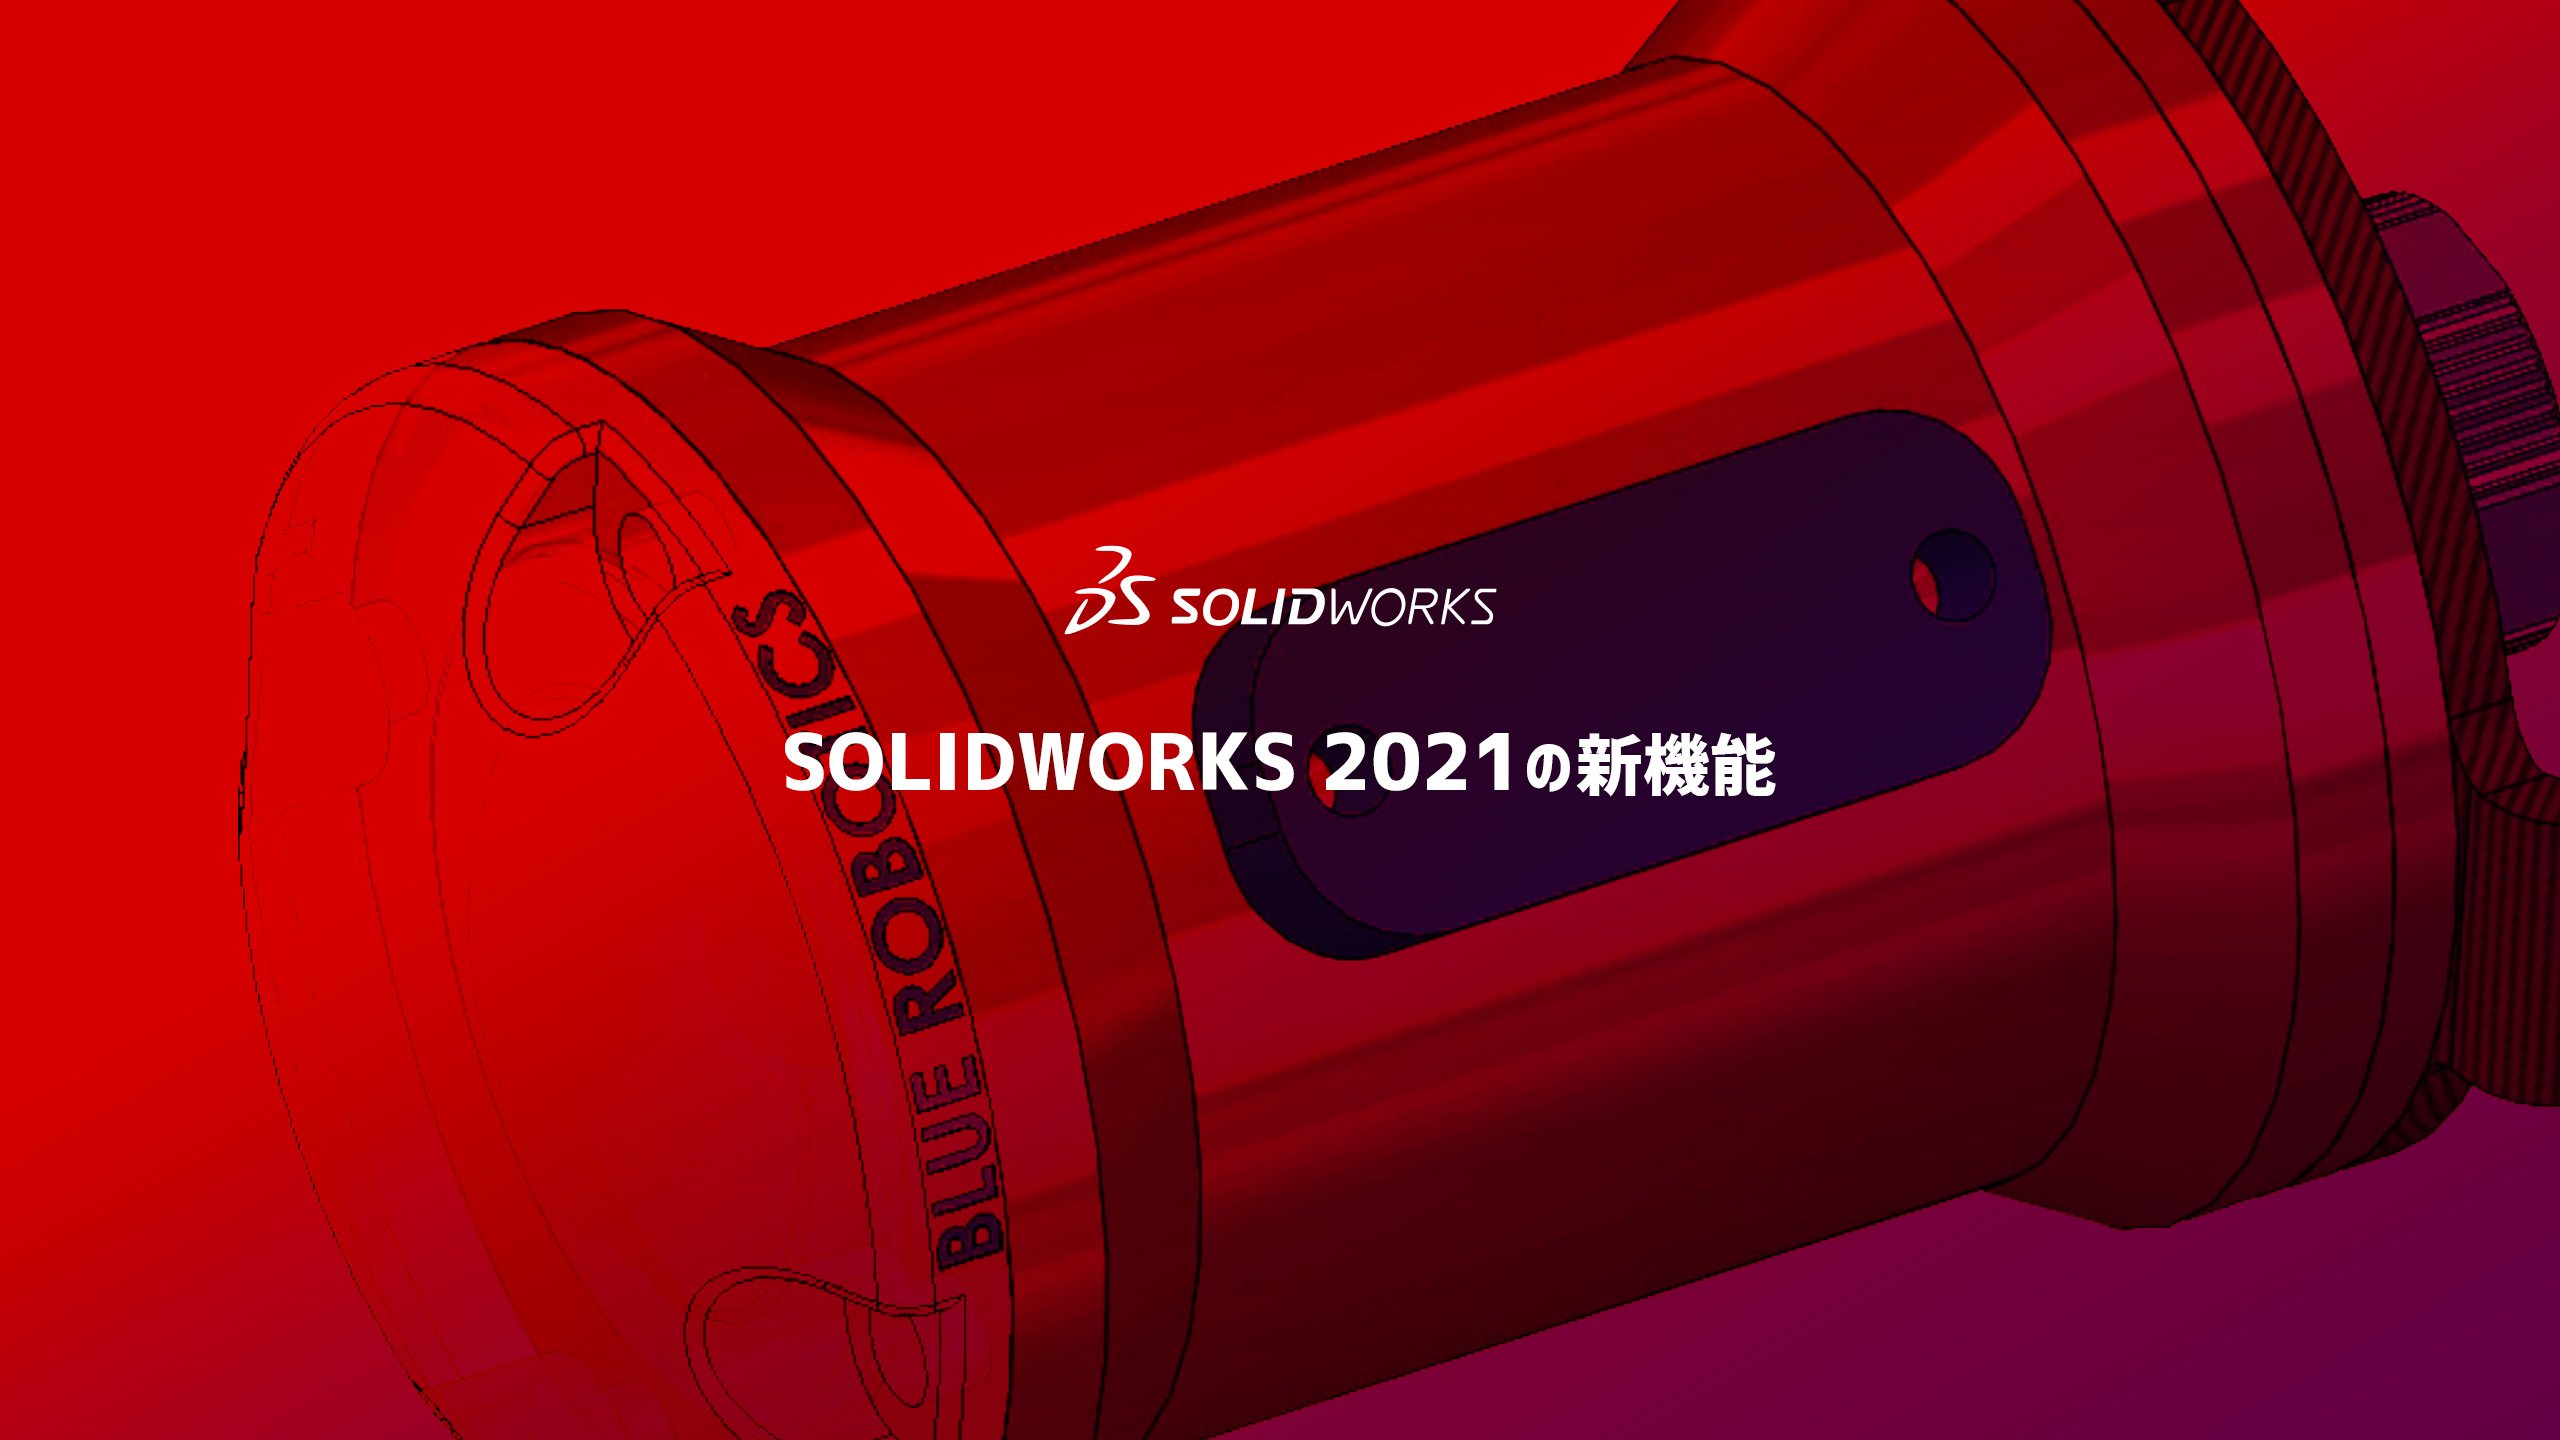 Solidworks 21の新機能を徹底解説した動画を無料公開中 Cad Cam Caeのシーキューブ